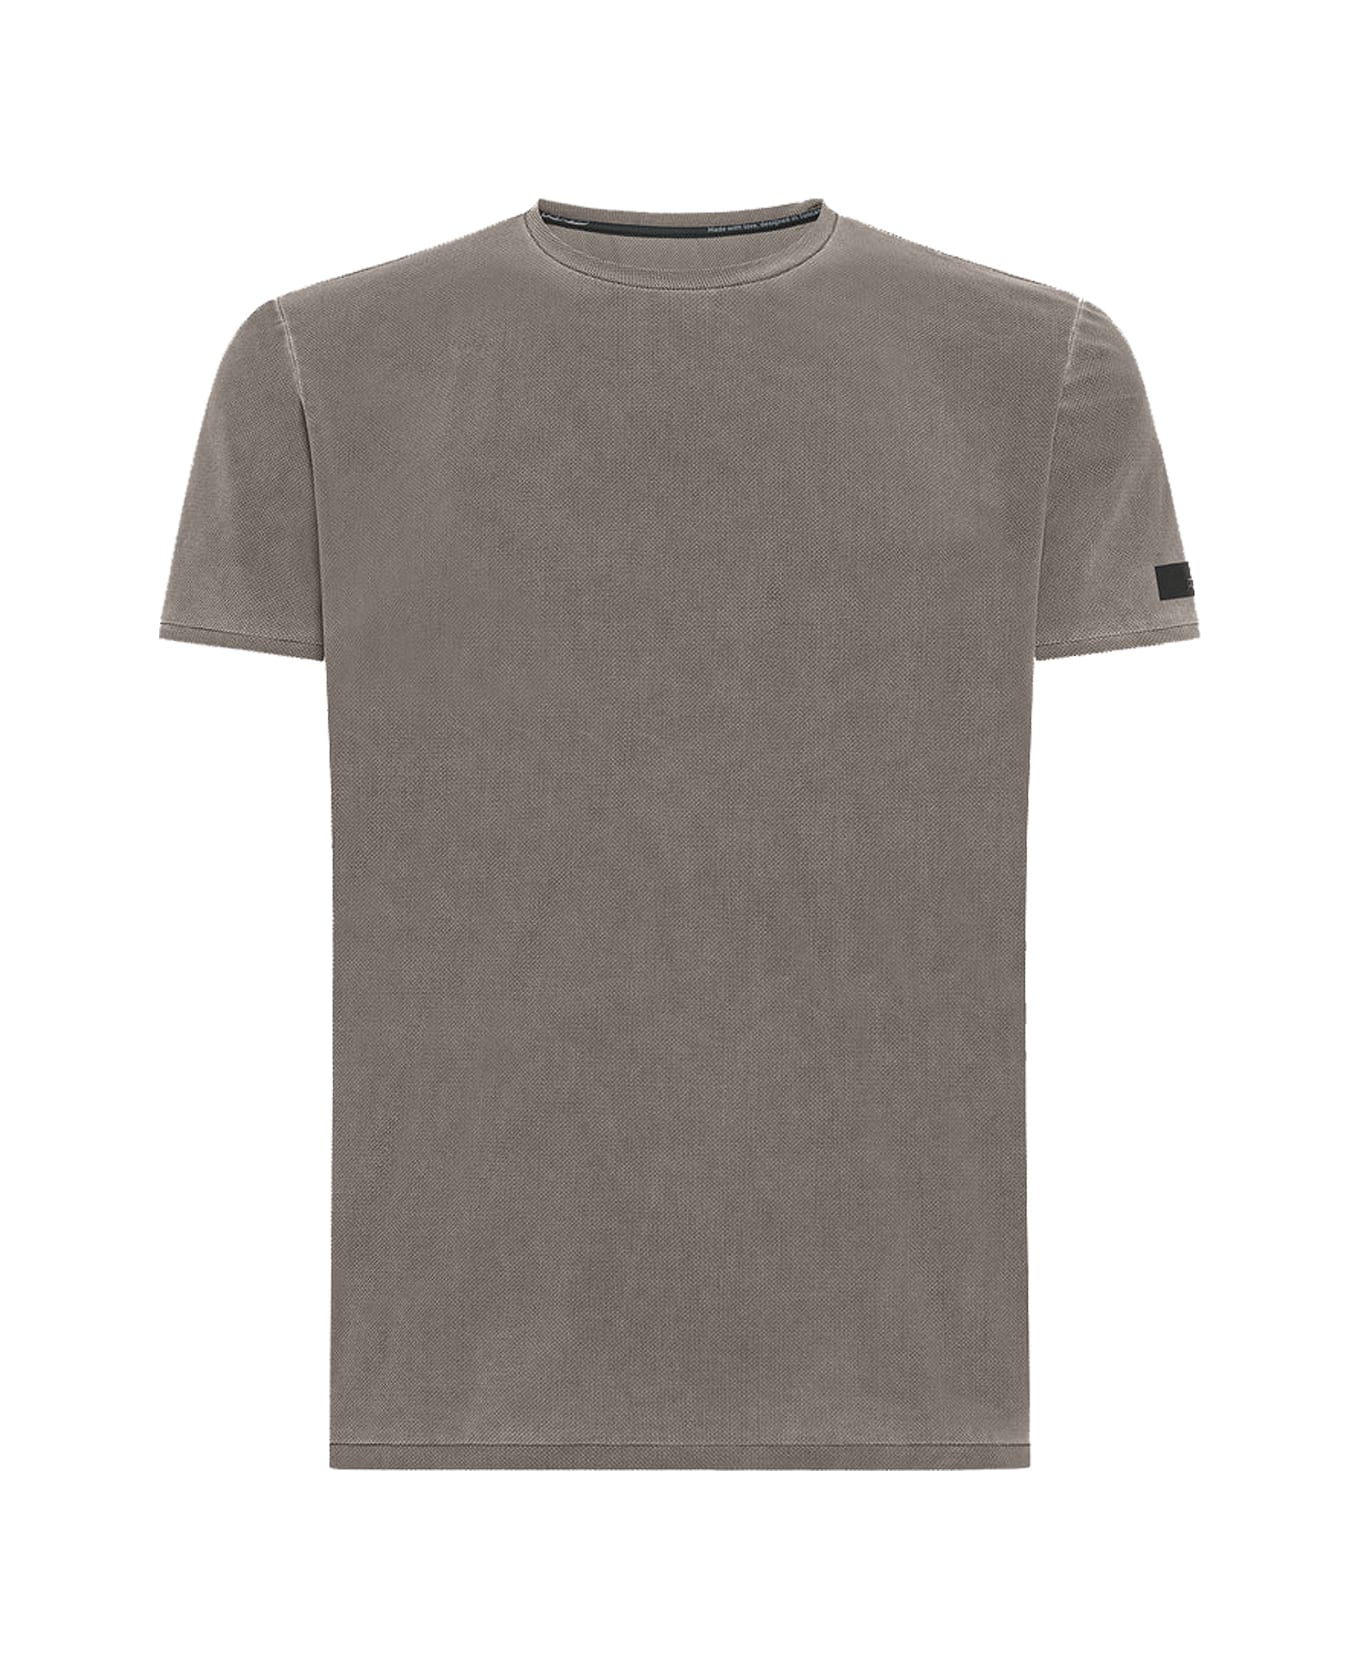 RRD - Roberto Ricci Design T-shirt - Brown